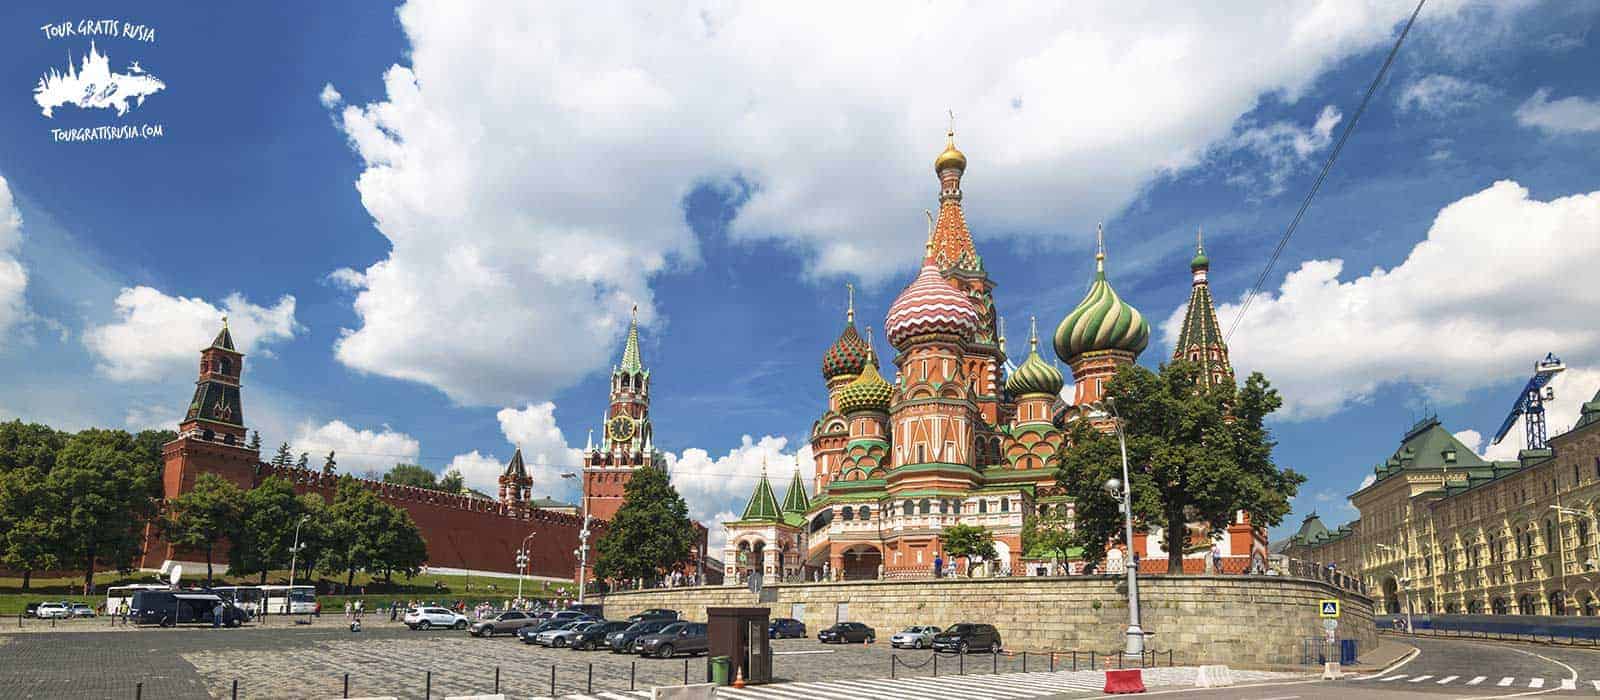 Tour completo en Moscú: centro – gratis, metro, Segunda Guerra y excursión nocturna